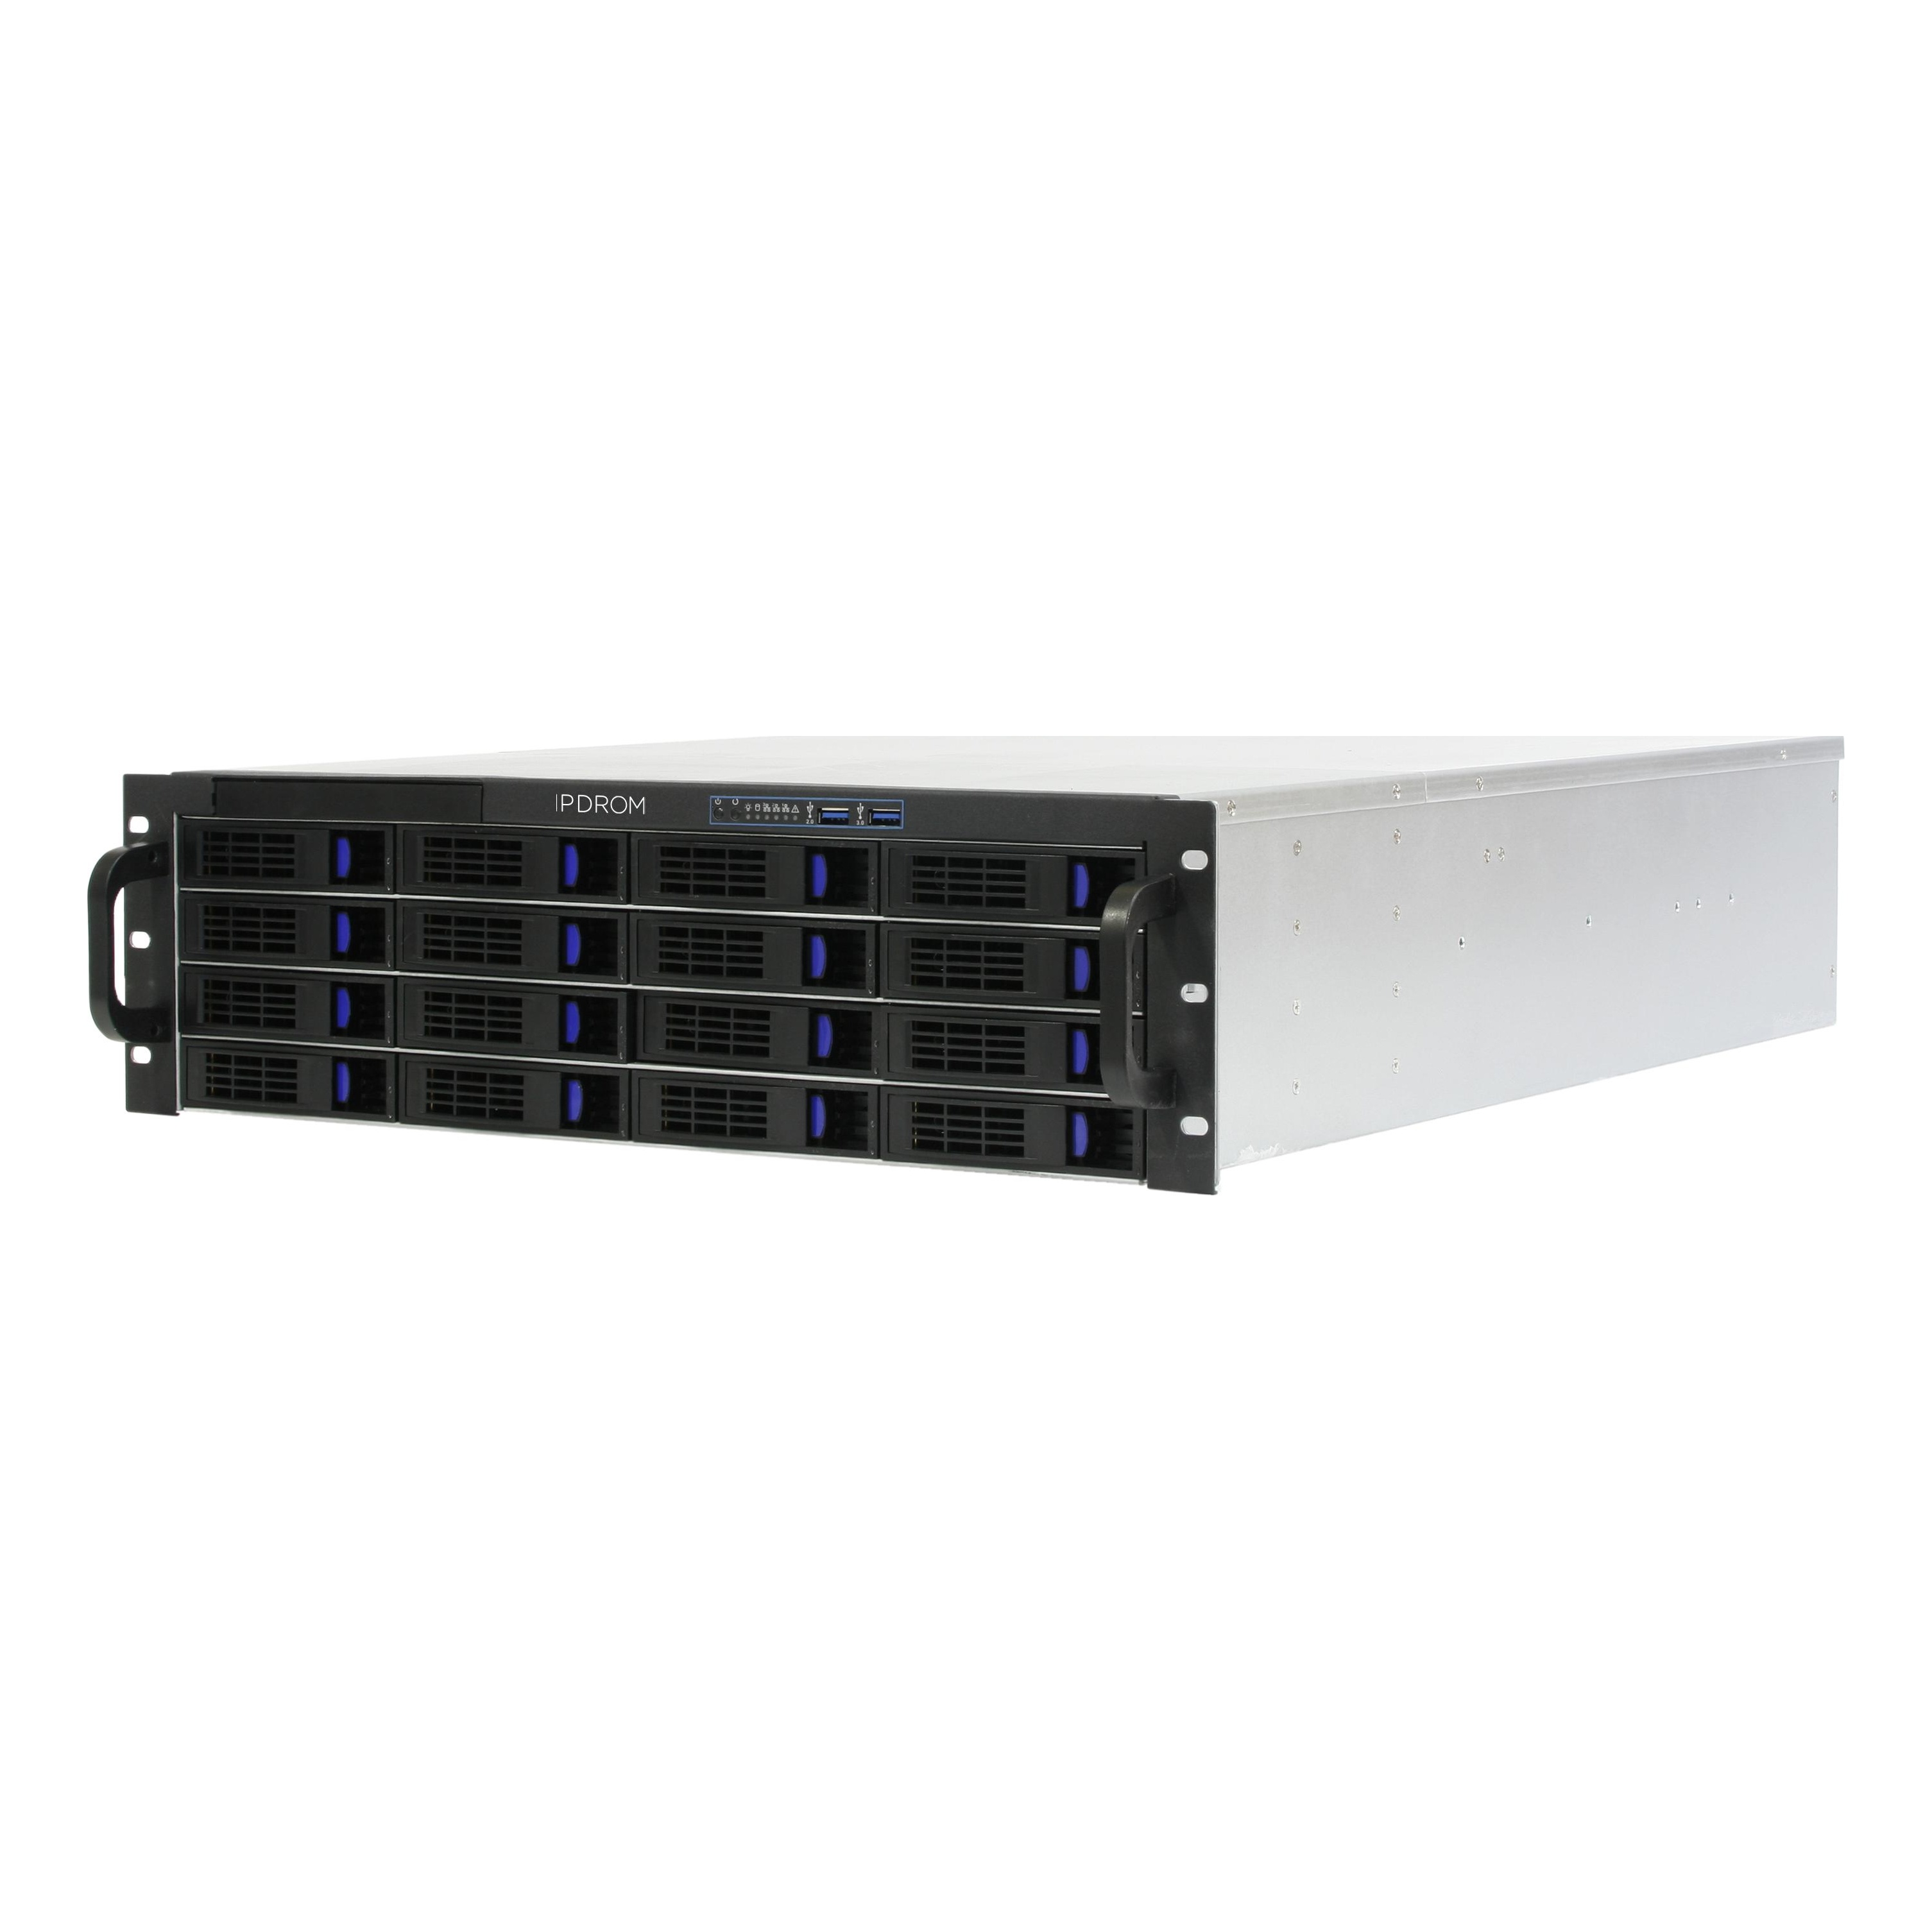 Сервер IPDROM Enterprise (E-96-РД-С3-144/Р6-2Э)